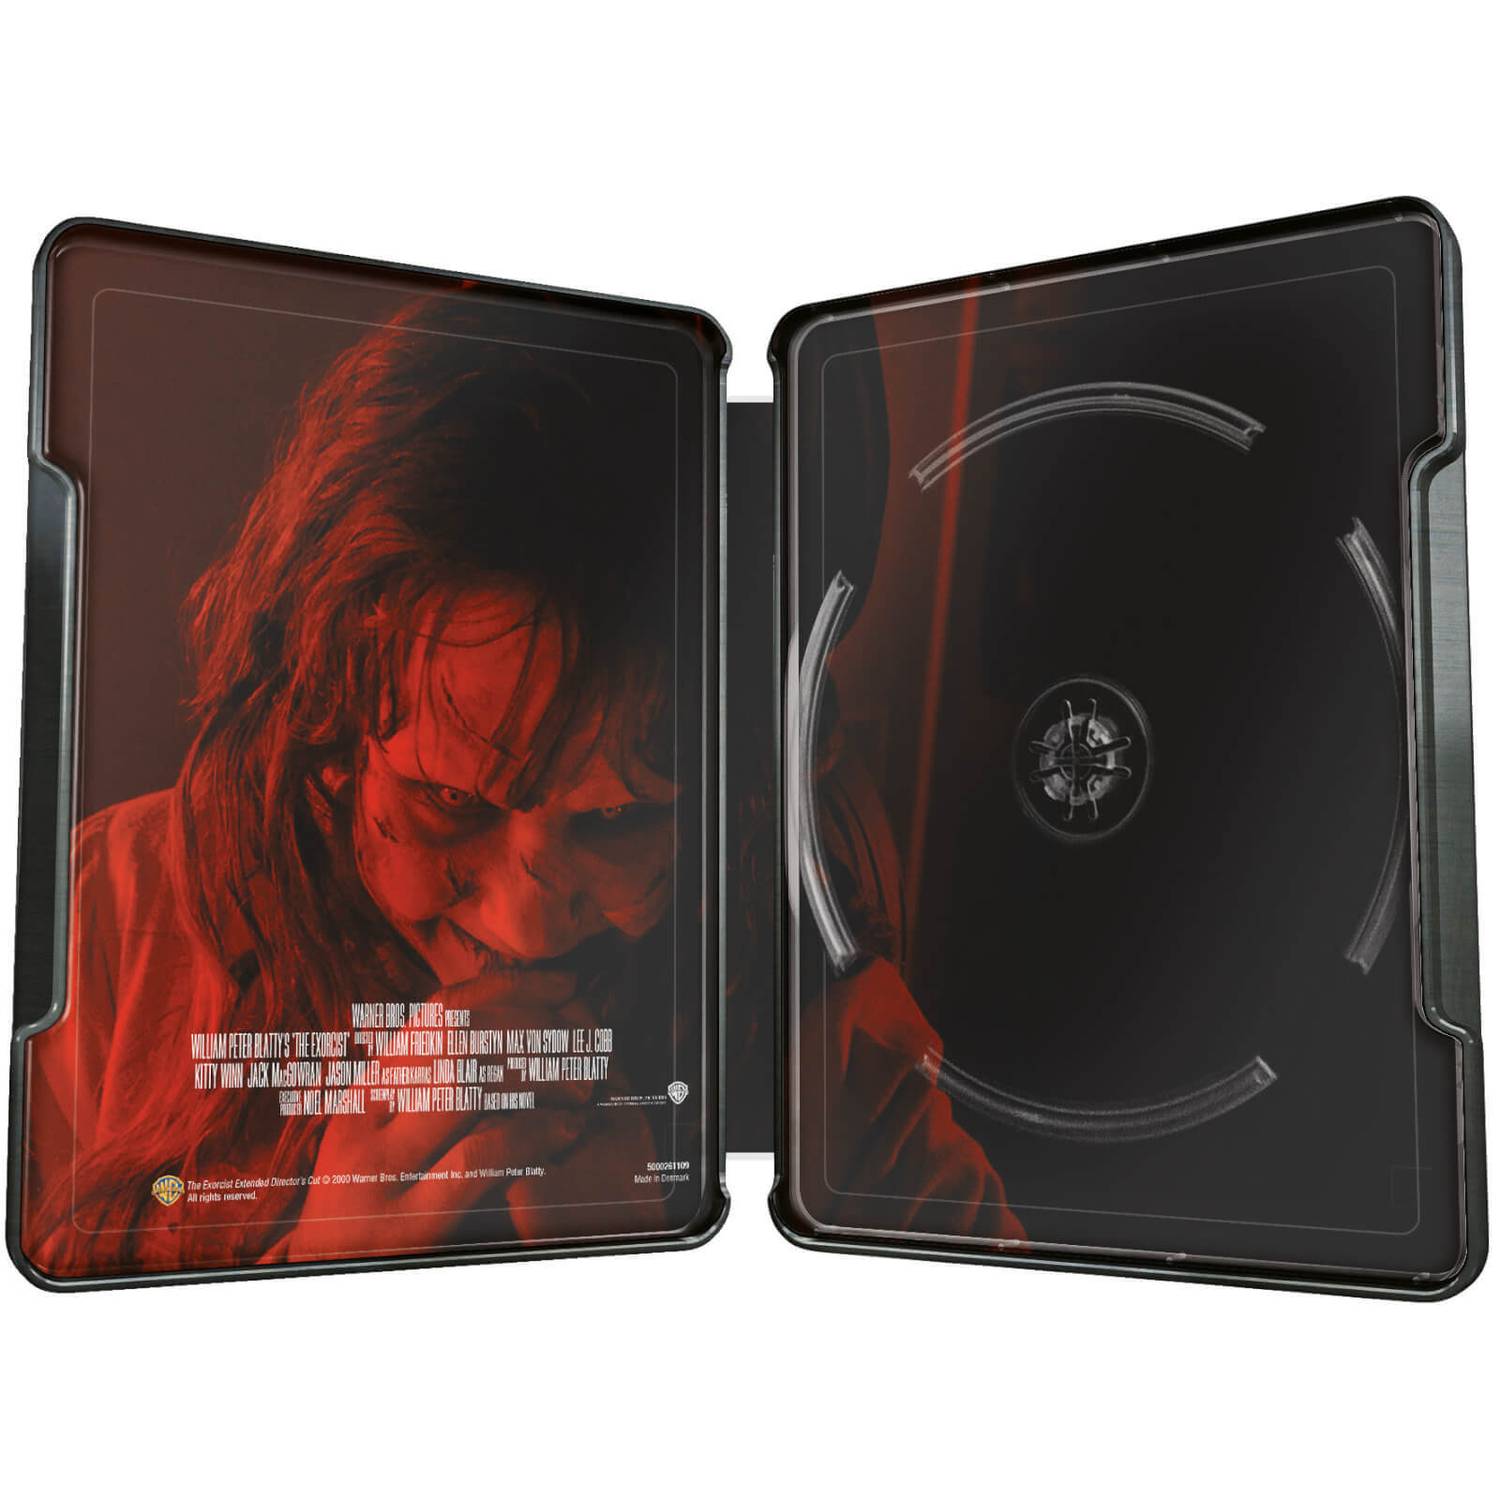 Изгоняющий дьявола (Режиссерская версия) (Blu-ray) Steelbook